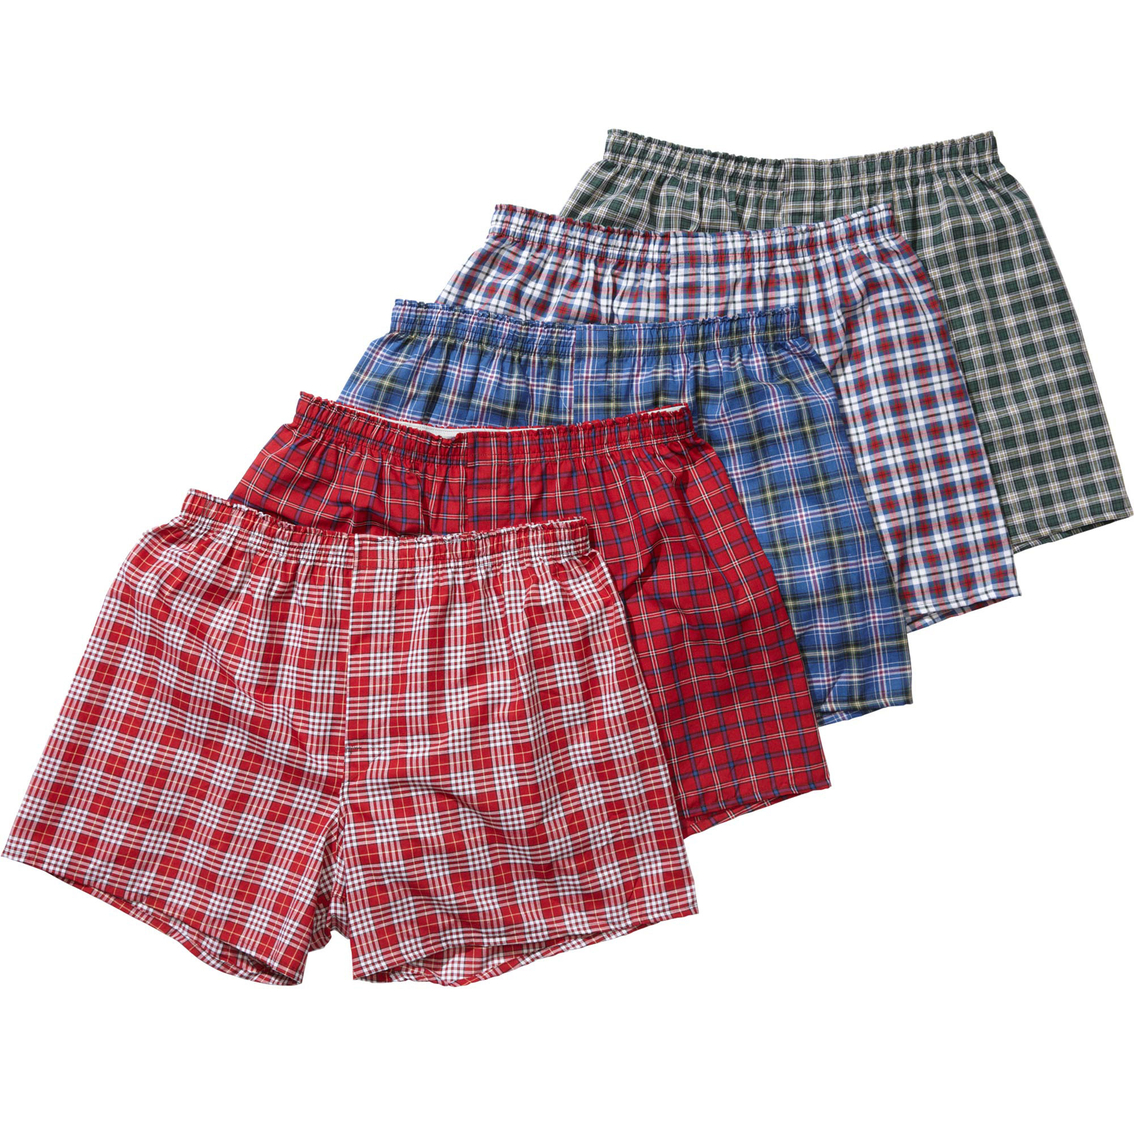 Hanes Men's 5 Pk. Tagless Tartan Boxer Shorts | Underwear | Apparel ...